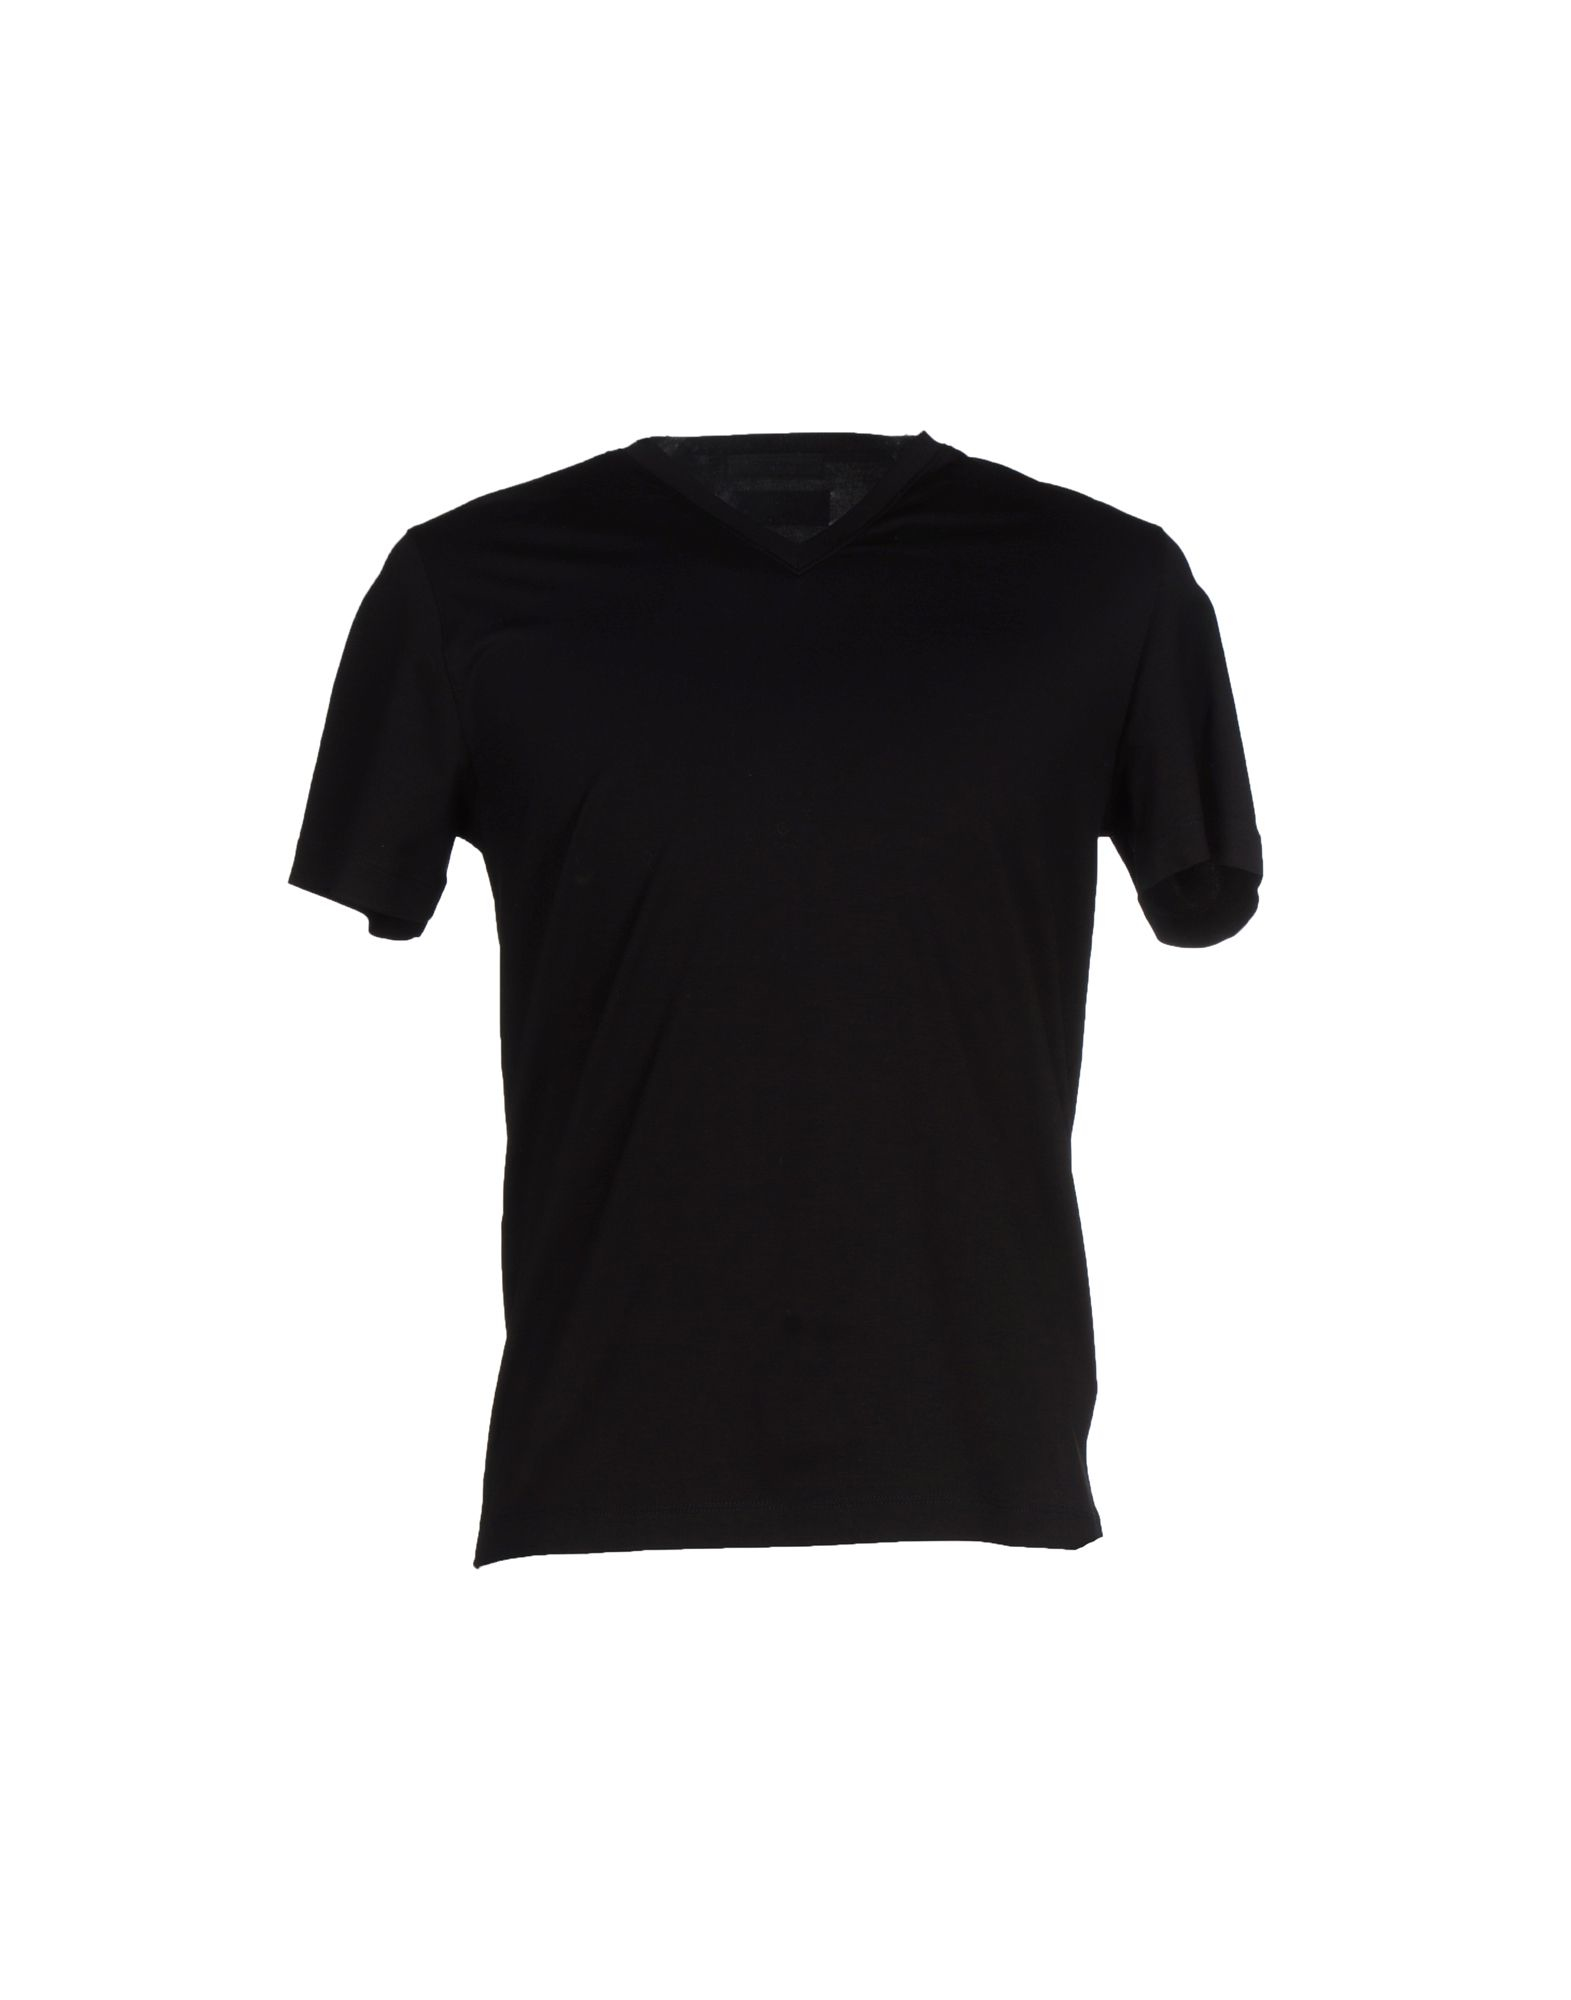 Lyst - Prada T-shirt in Black for Men